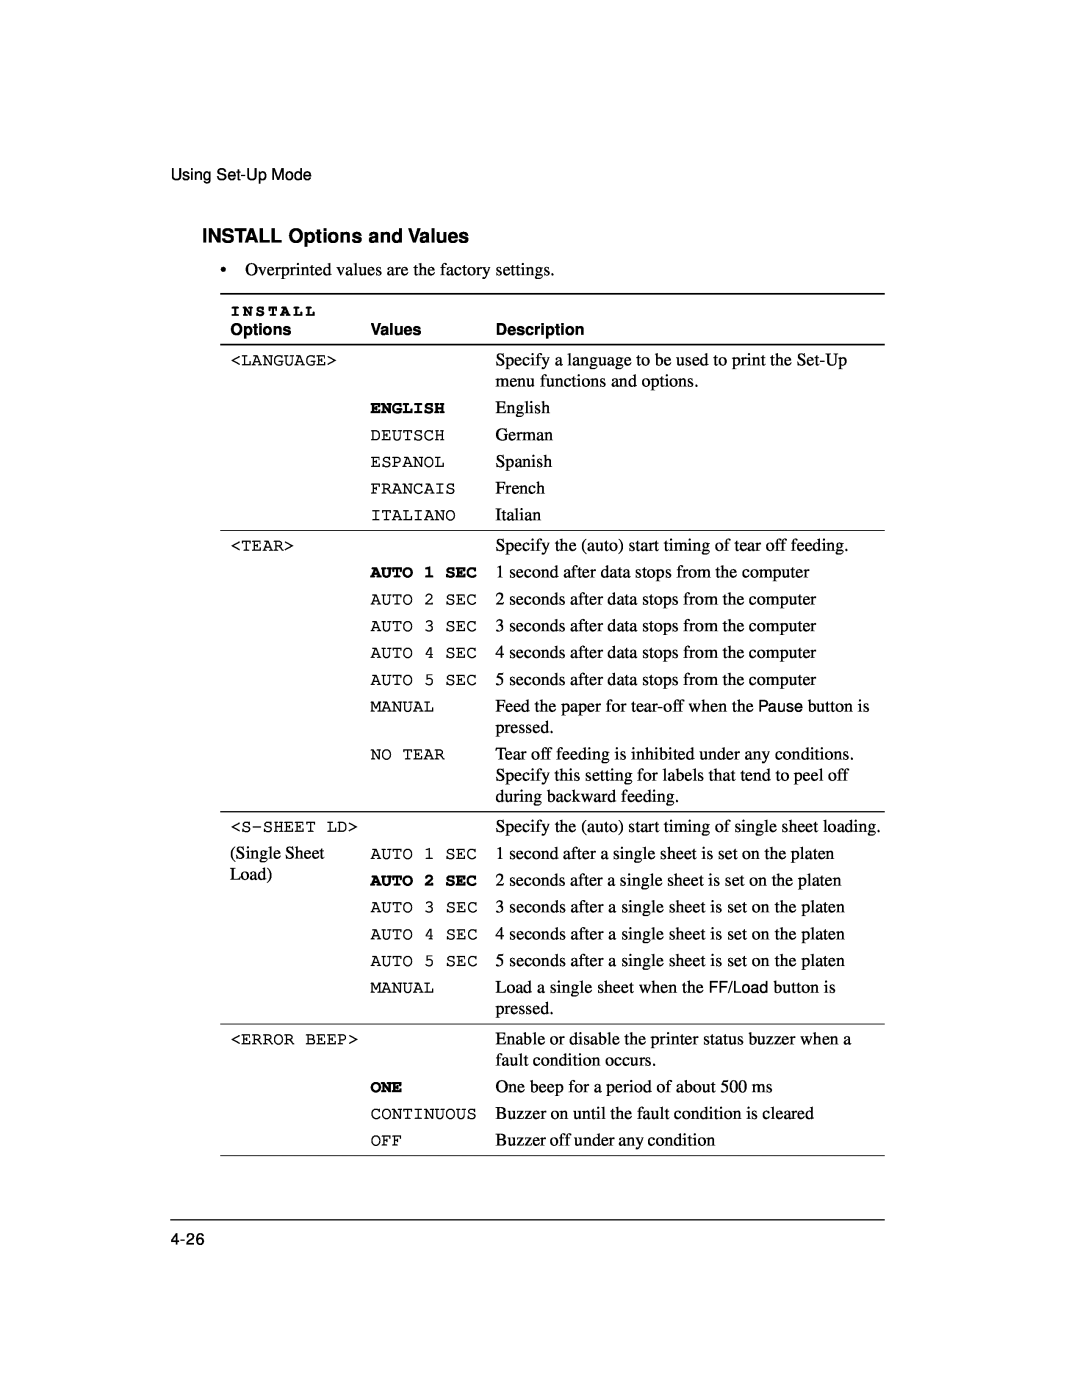 Genicom LA36 manual INSTALL Options and Values, English, AUTO 1 SEC, AUTO 2 SEC 